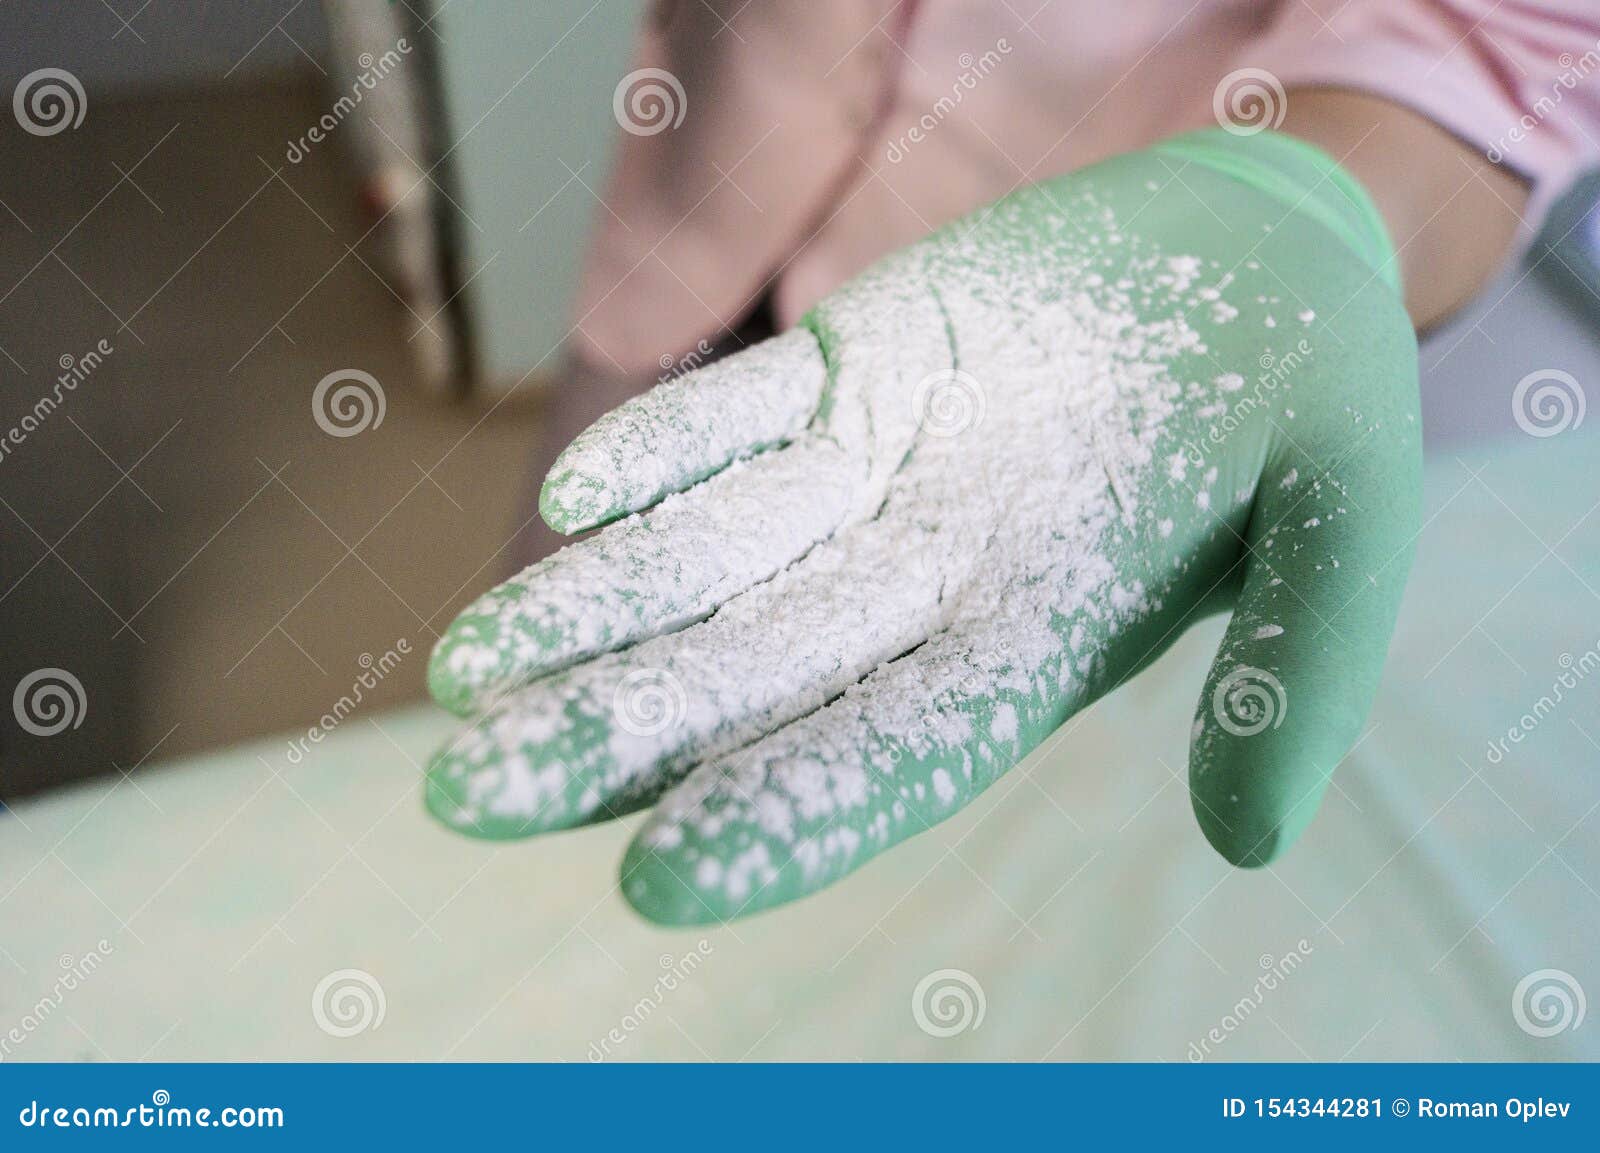 master shugaring apply talcum powder on hand before the procedure